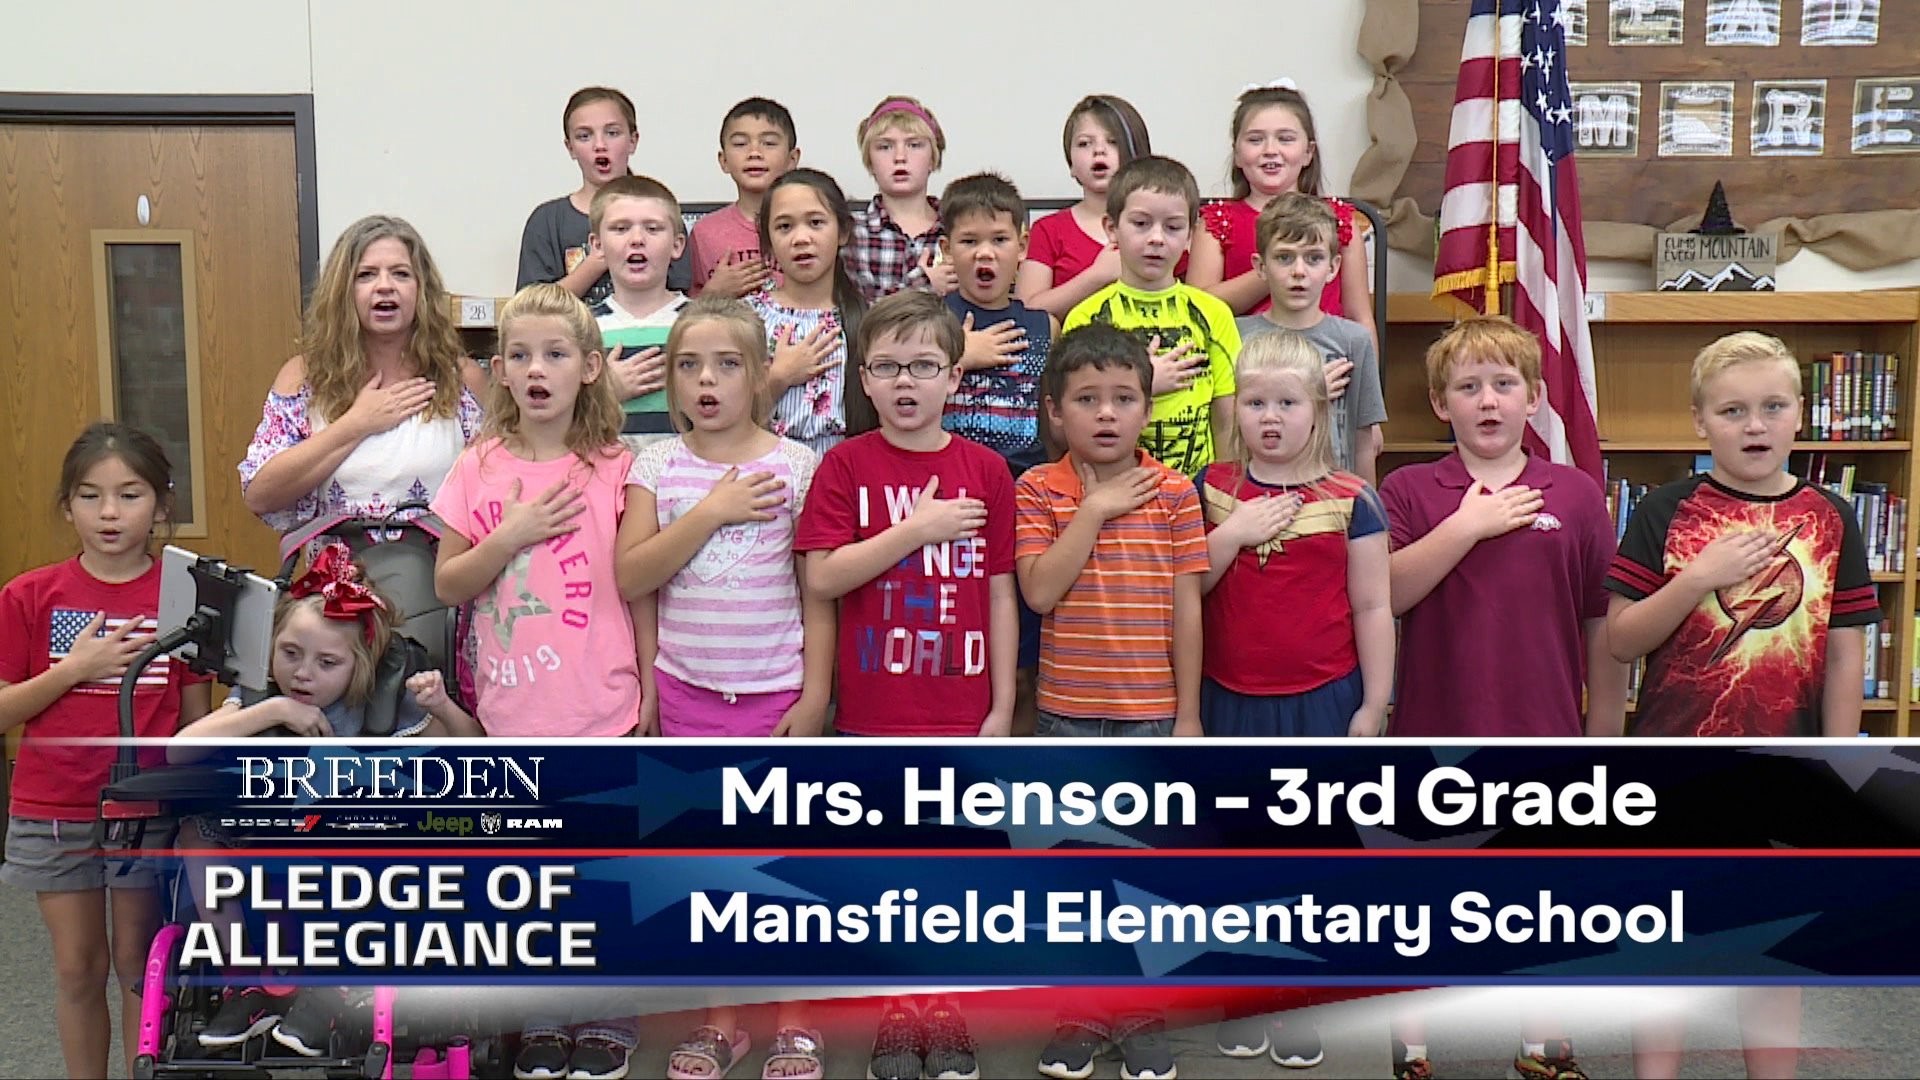 Mrs. Henson 3rd Grade Mansfield Elementary School